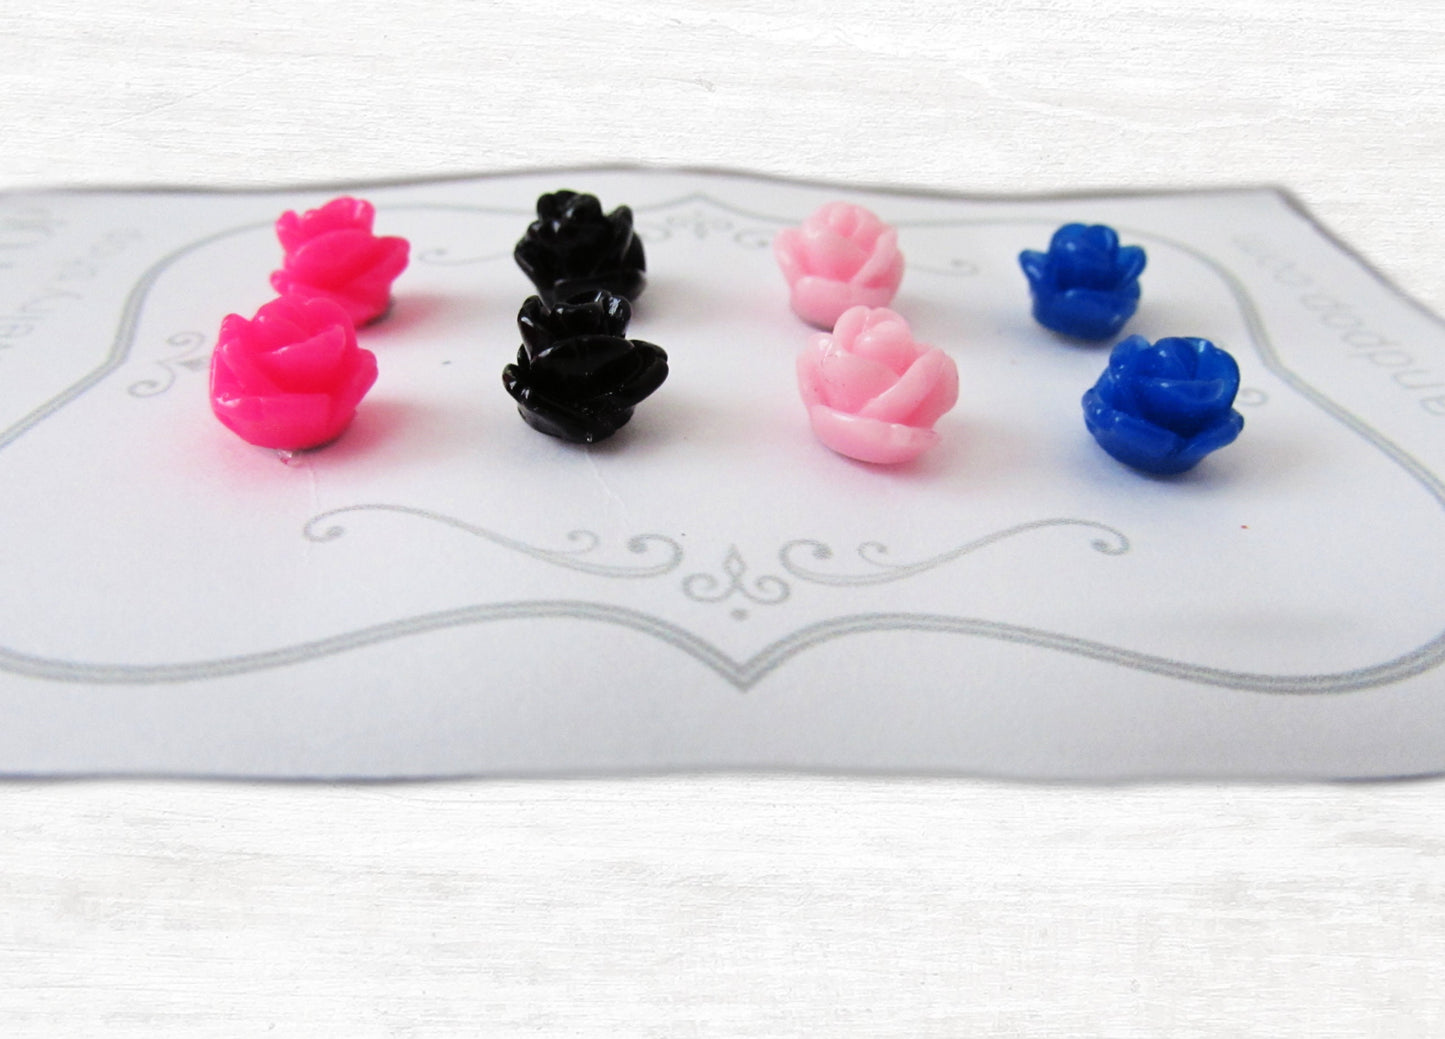 Mini Rose Post Earrings, Flower Resin Earrings in Hot Pink, Black, Baby Pink, Royal Blue. Hypoallergenic Small Rose Stud Earrings for Girls